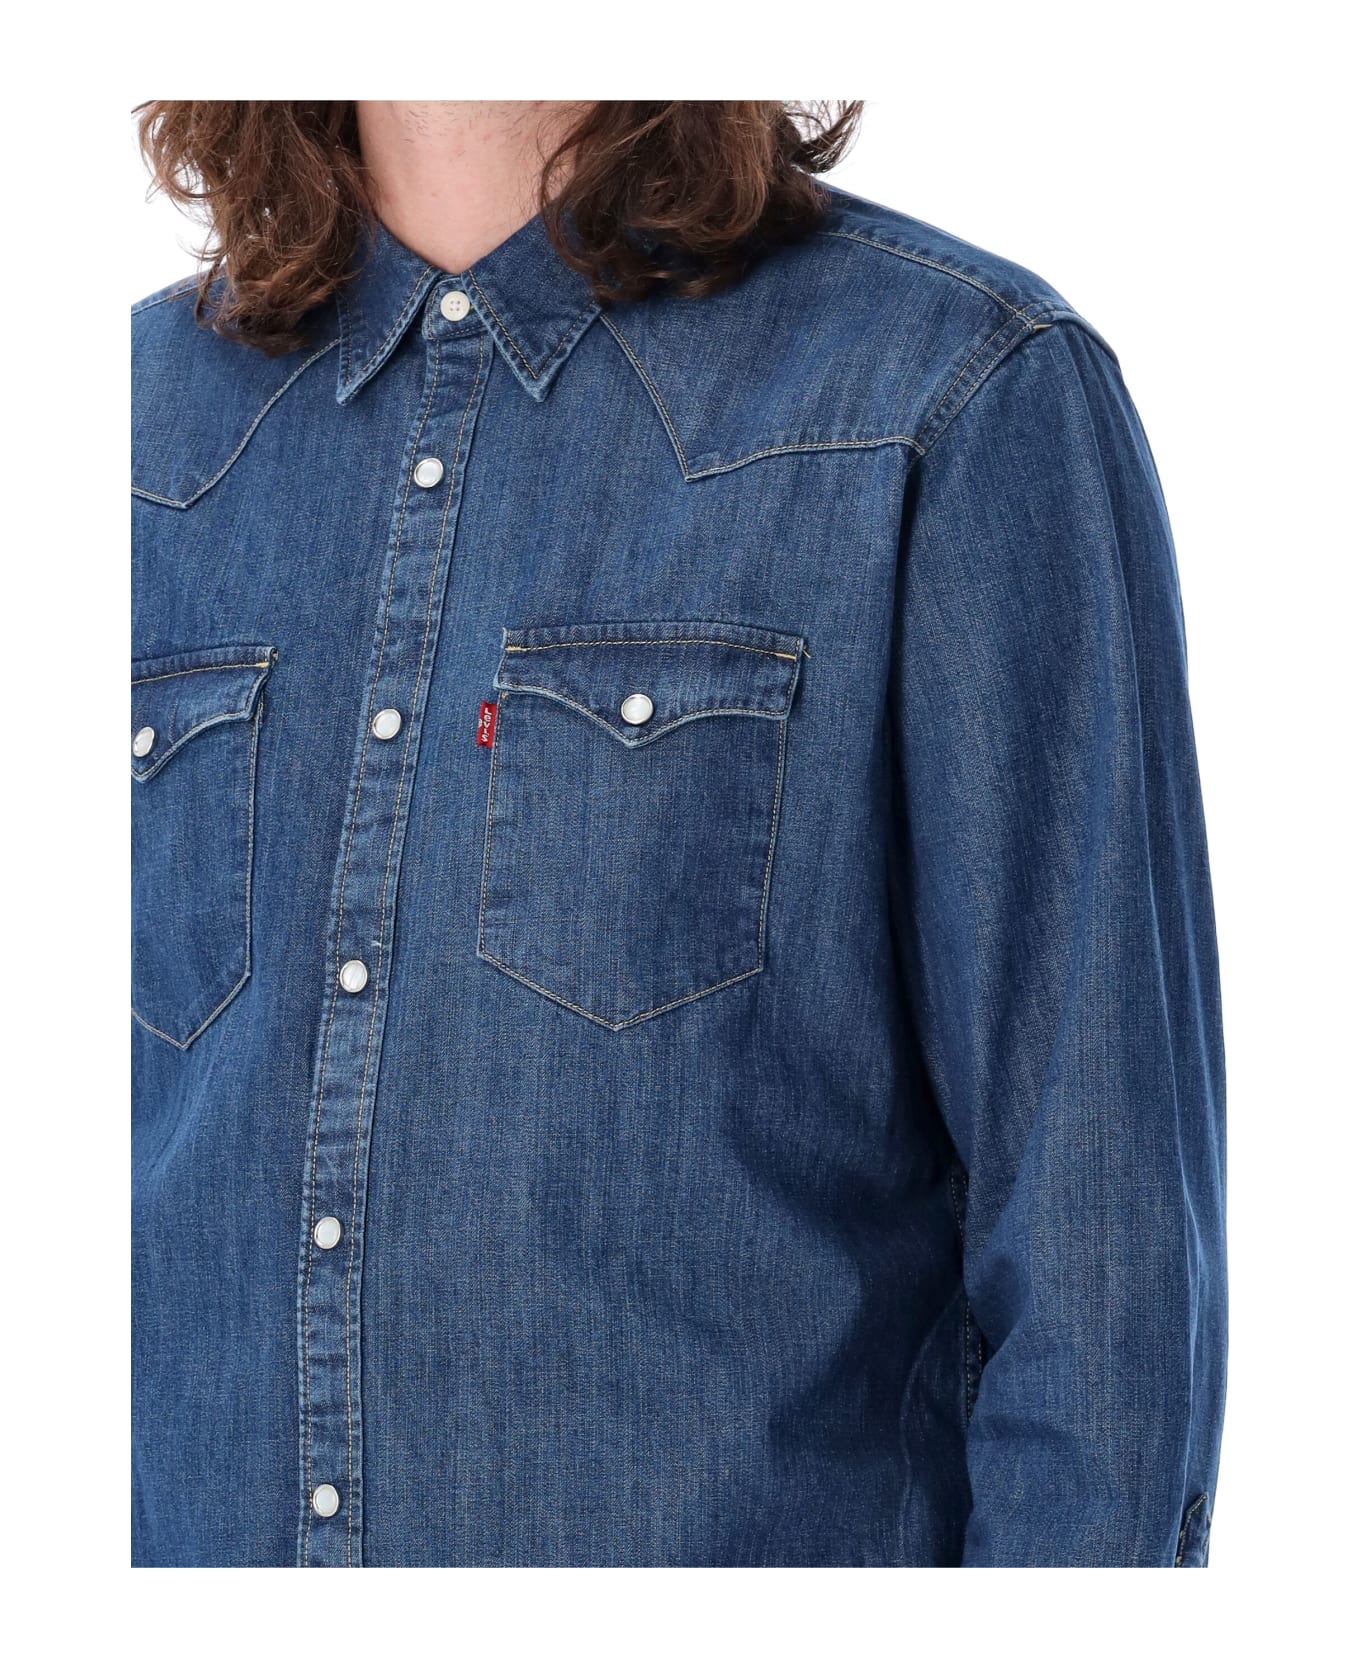 Levi's Barstow Western Shirt - DK BLUE